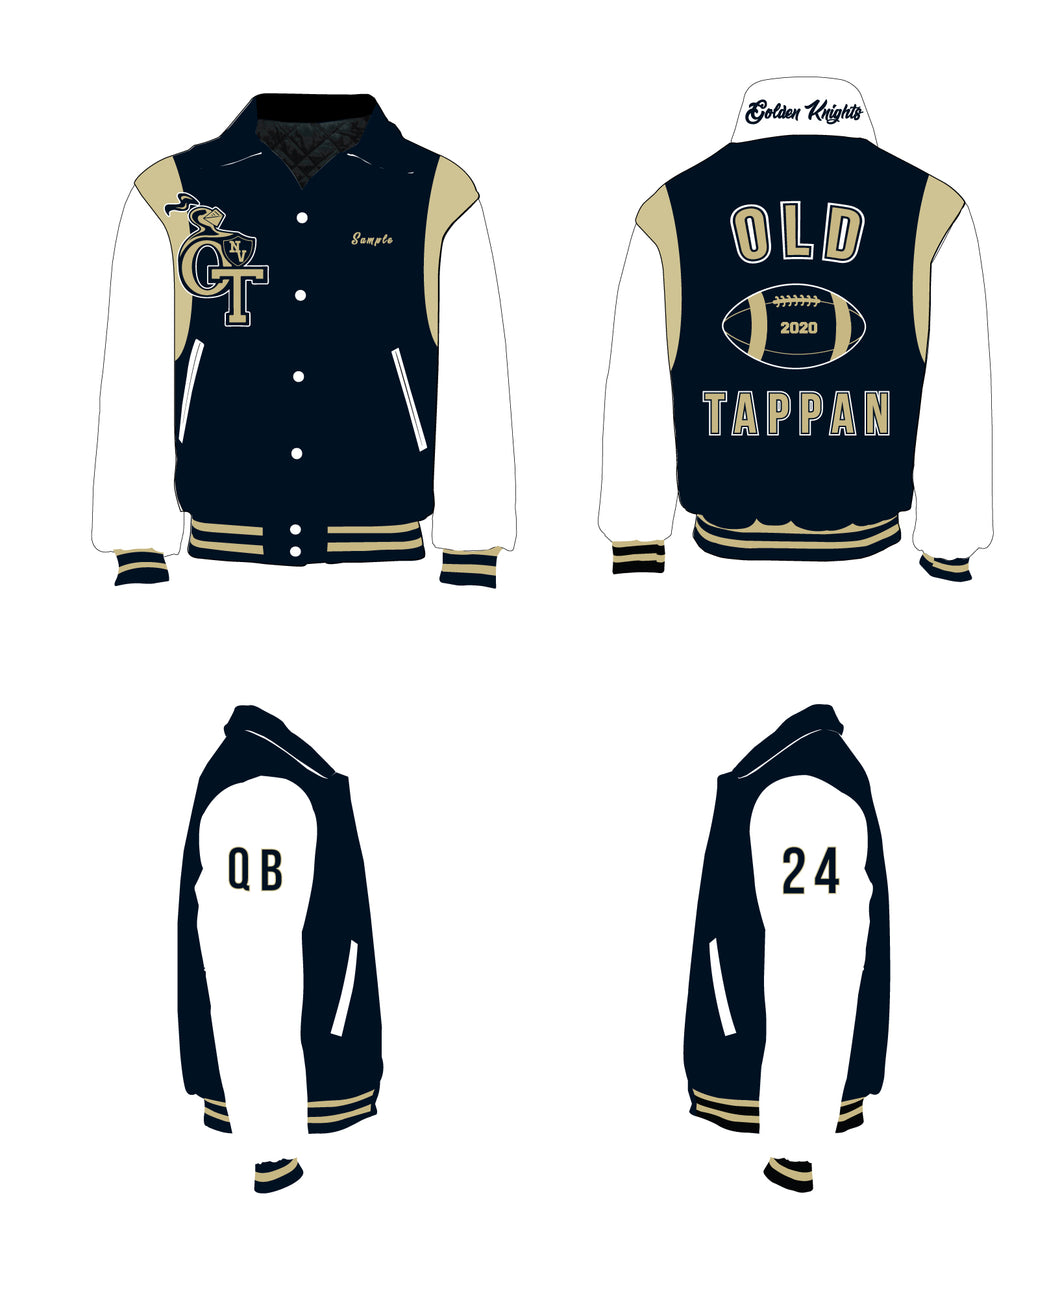 NVOT Golden Knights Varsity Jacket - Design 2 (White Sleeves)